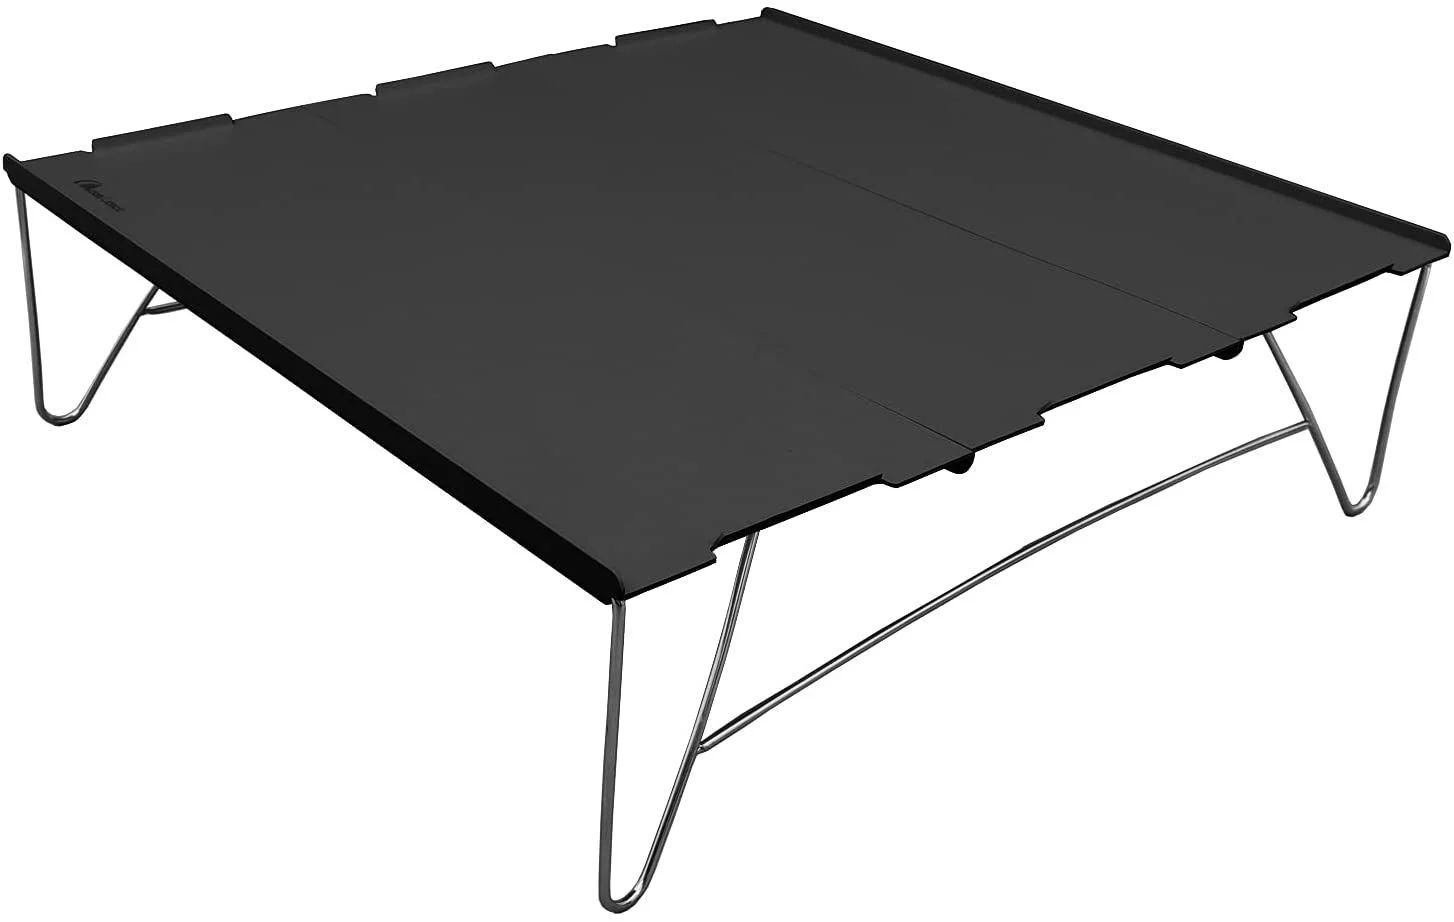 Moon Lence アウトドアテーブル ミニローテーブル ソロキャンプ コンパクト 折りたたみ式 アルミ製 ブラック